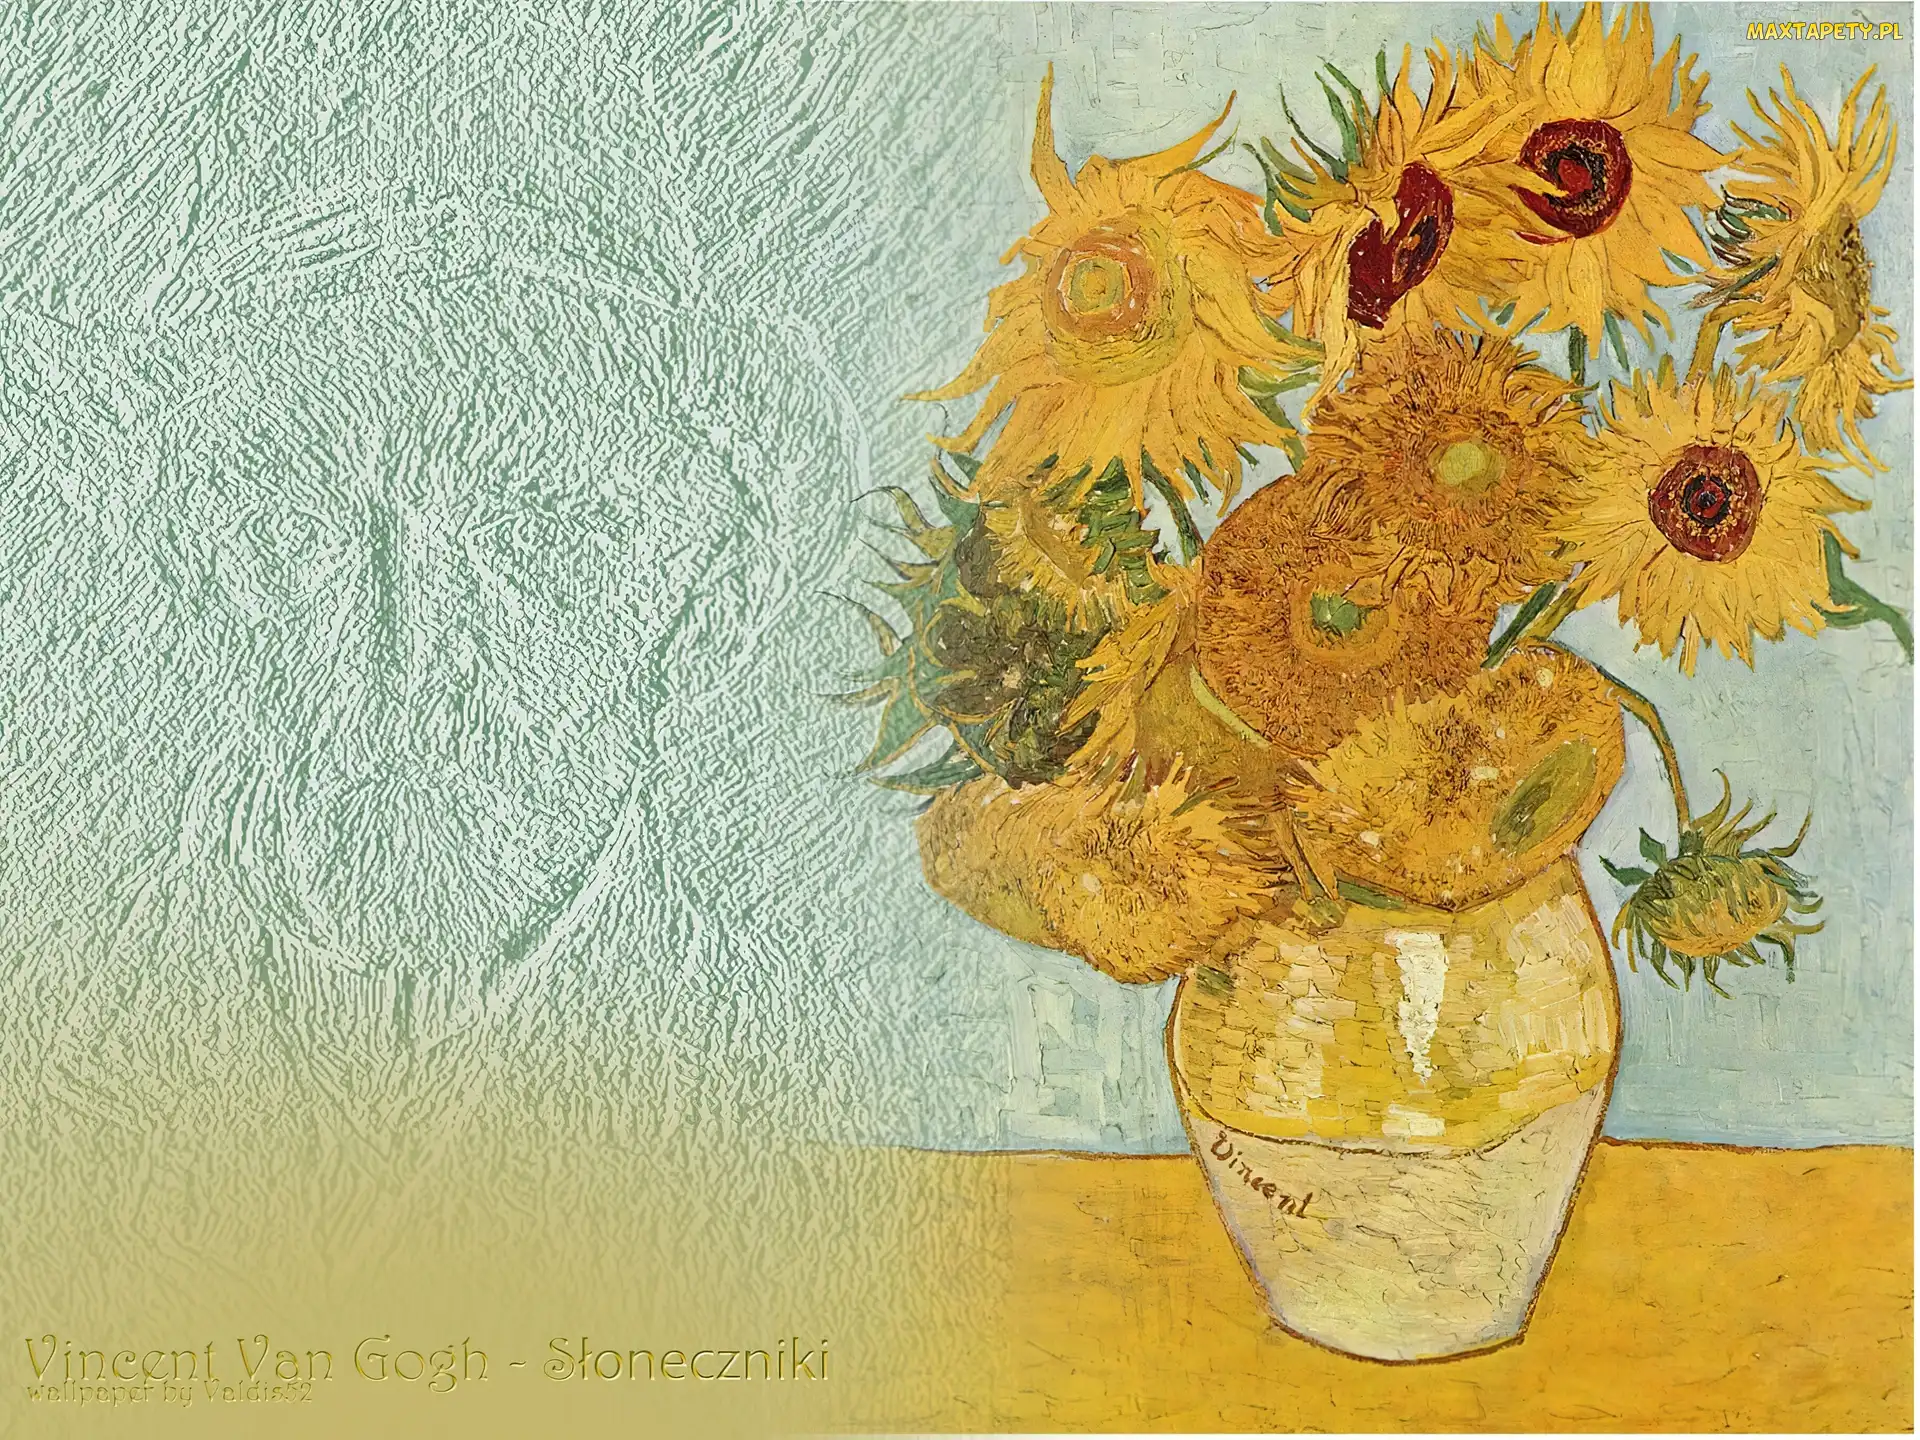 Słoneczniki, Vincent Van Gogh